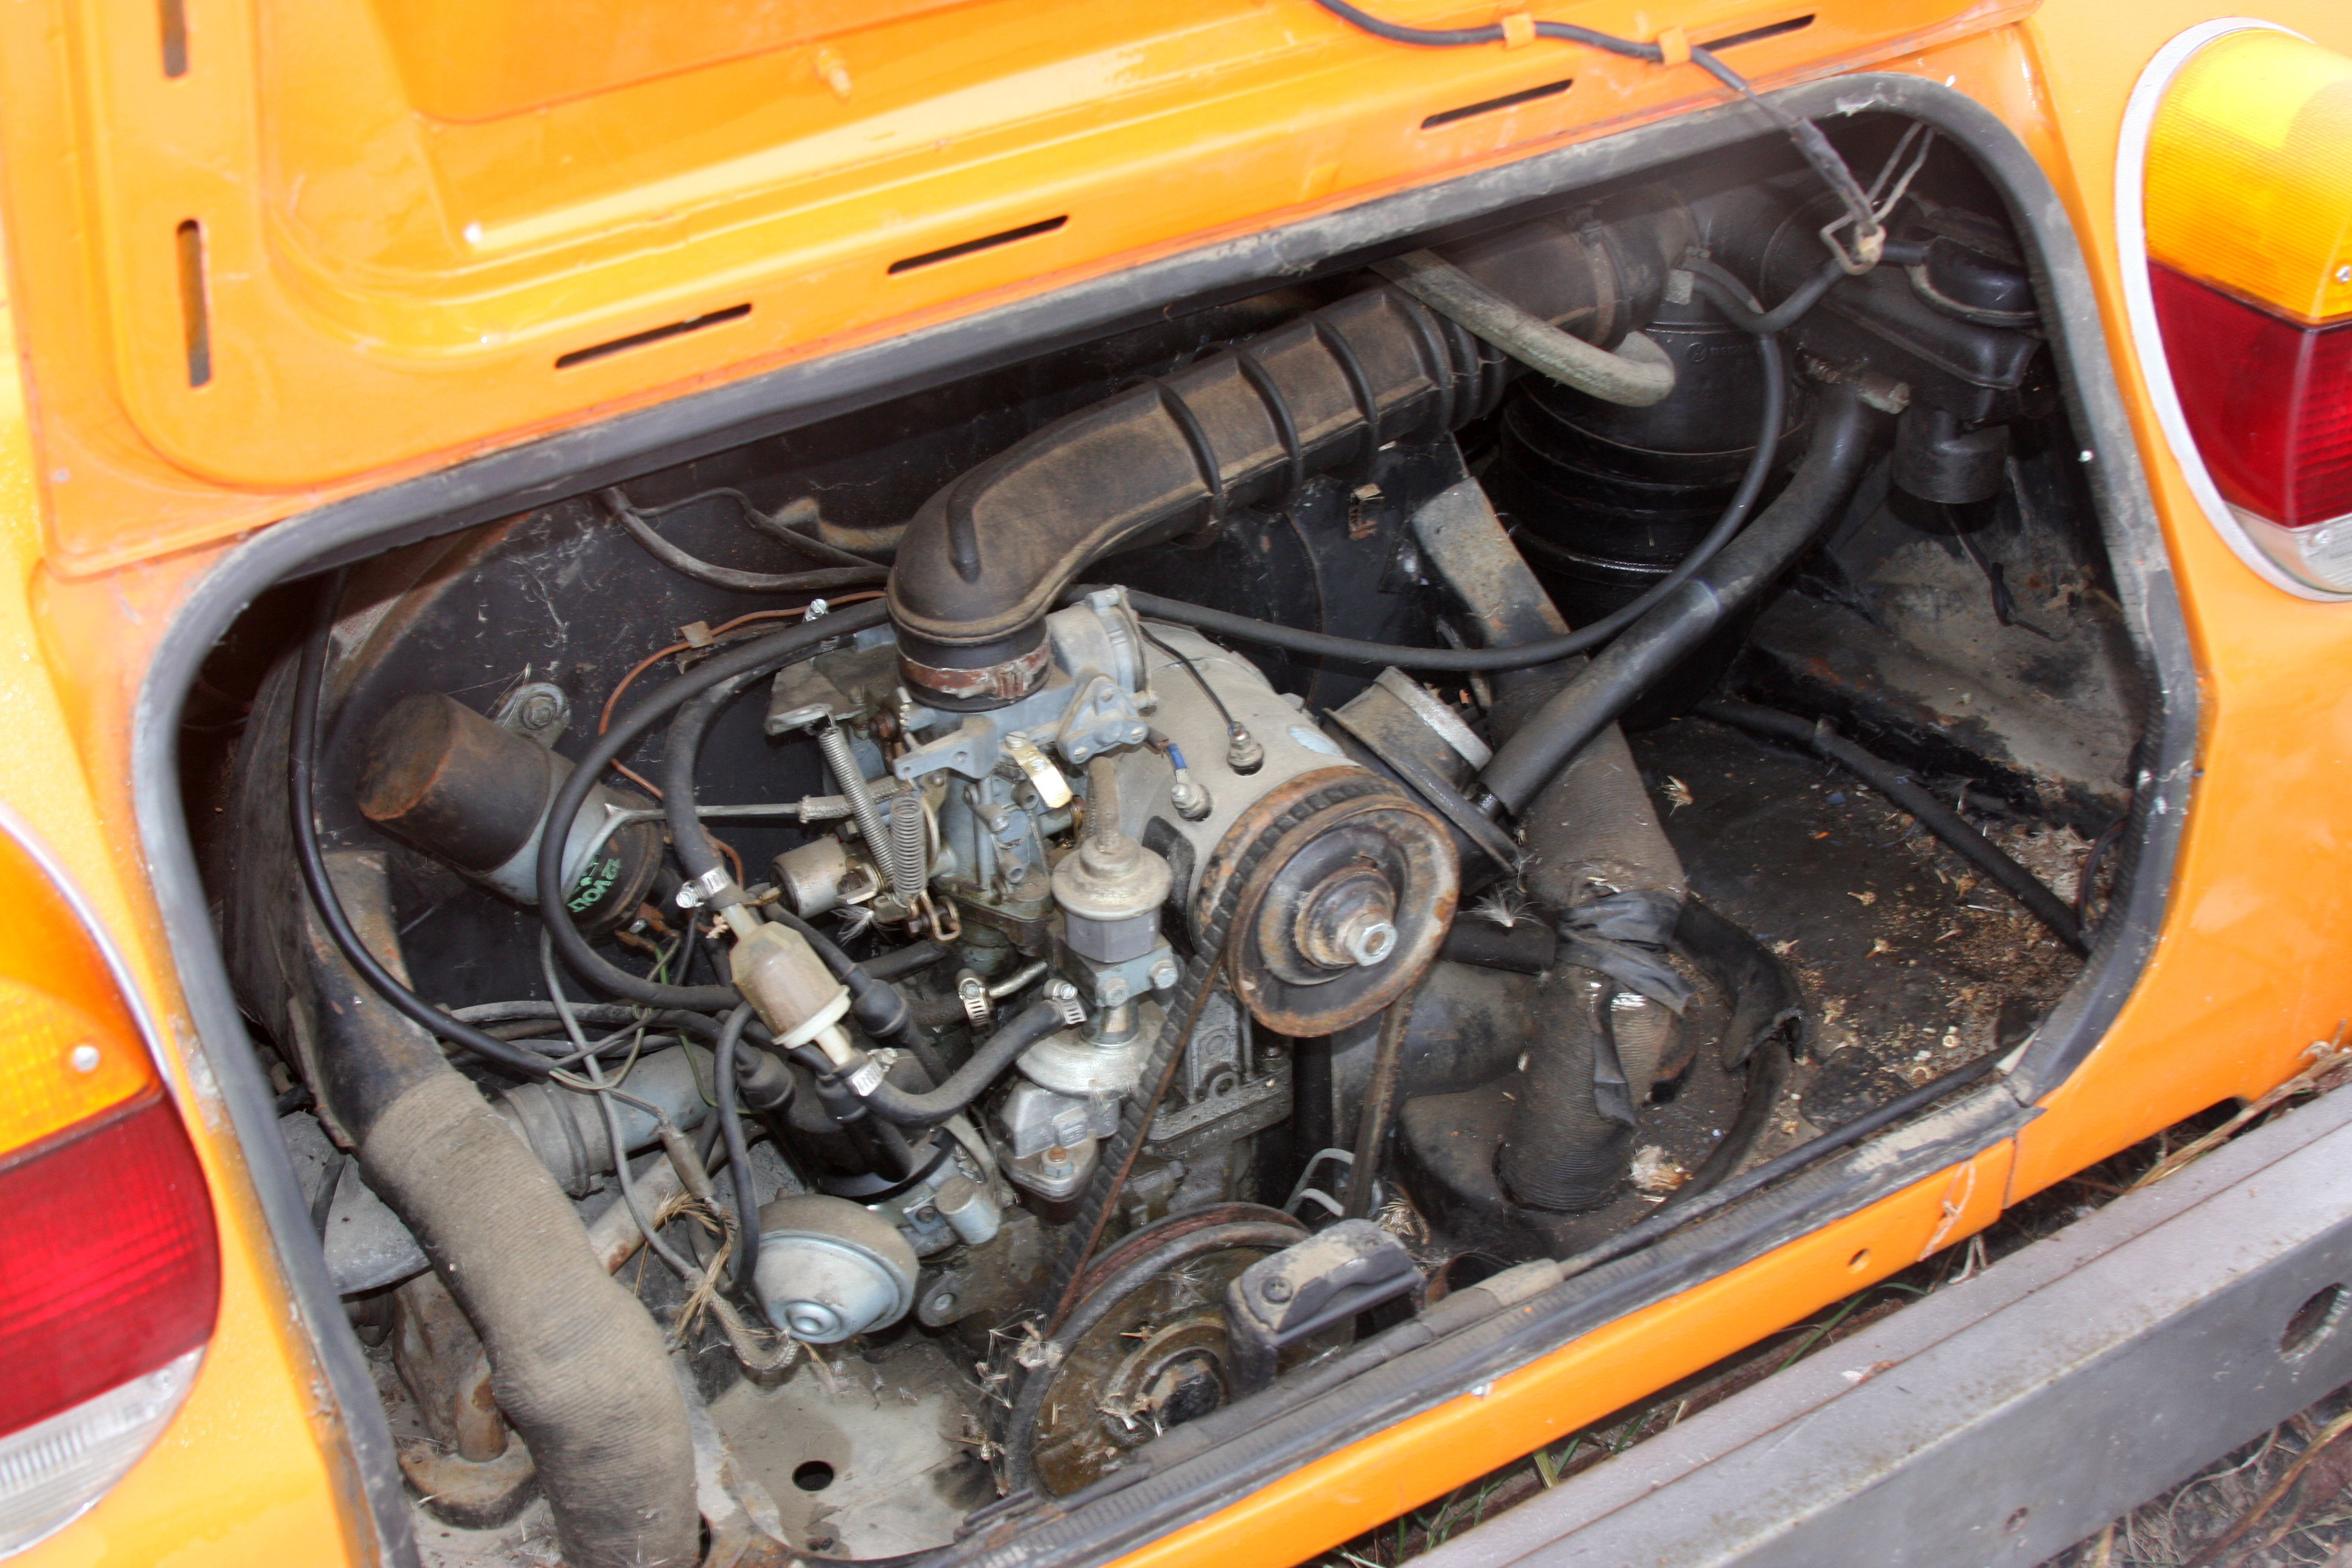 Volkswagen Thing engine | Flickr - Photo Sharing!